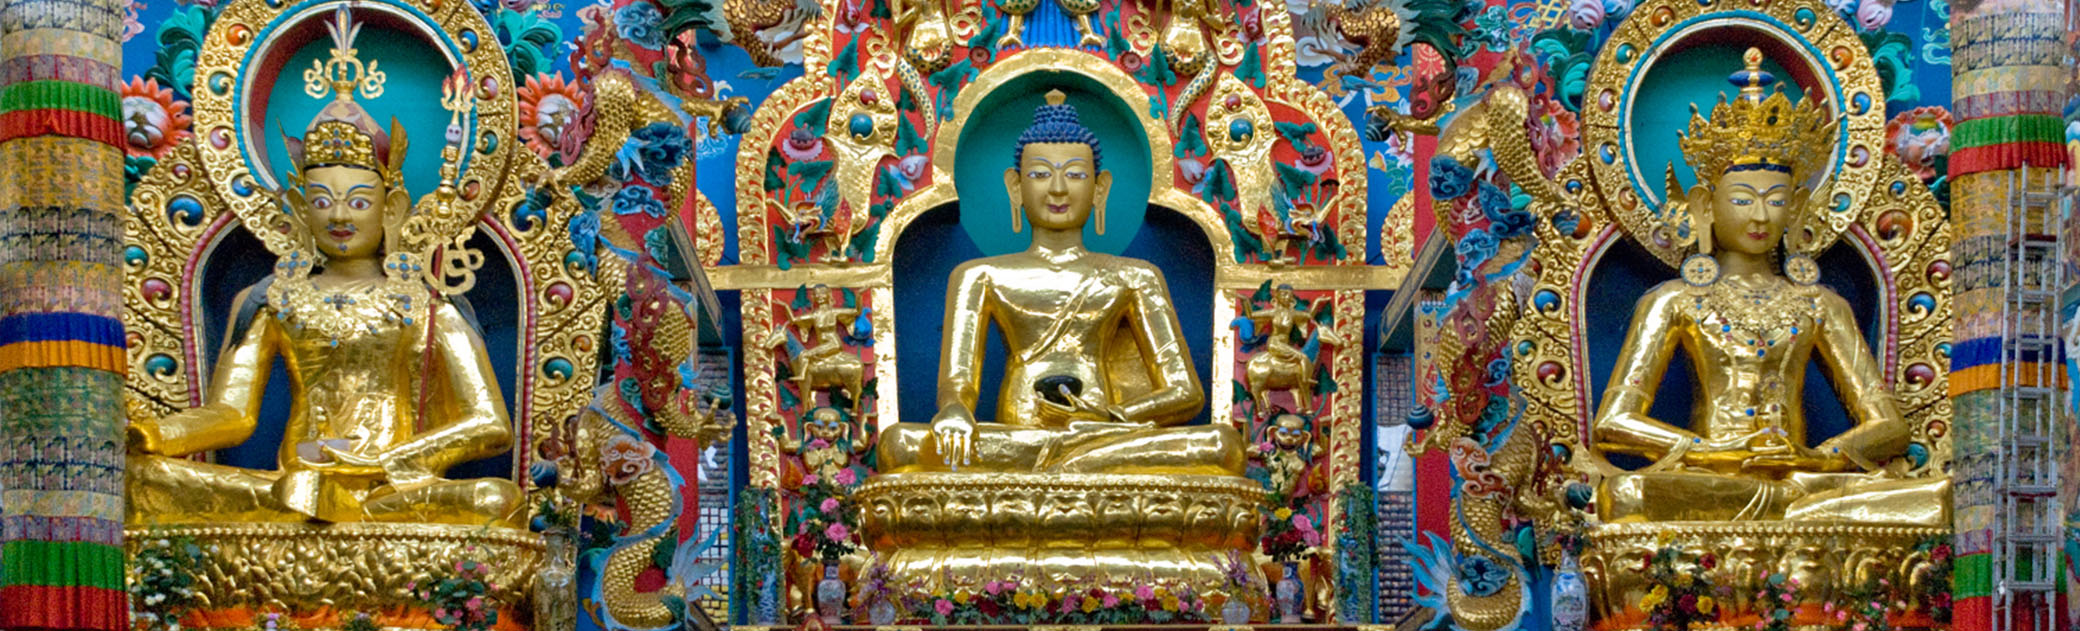 Guru Rinpoche, Shakyamuni Buddha, Amitayus - golden images in Namdroling monastery